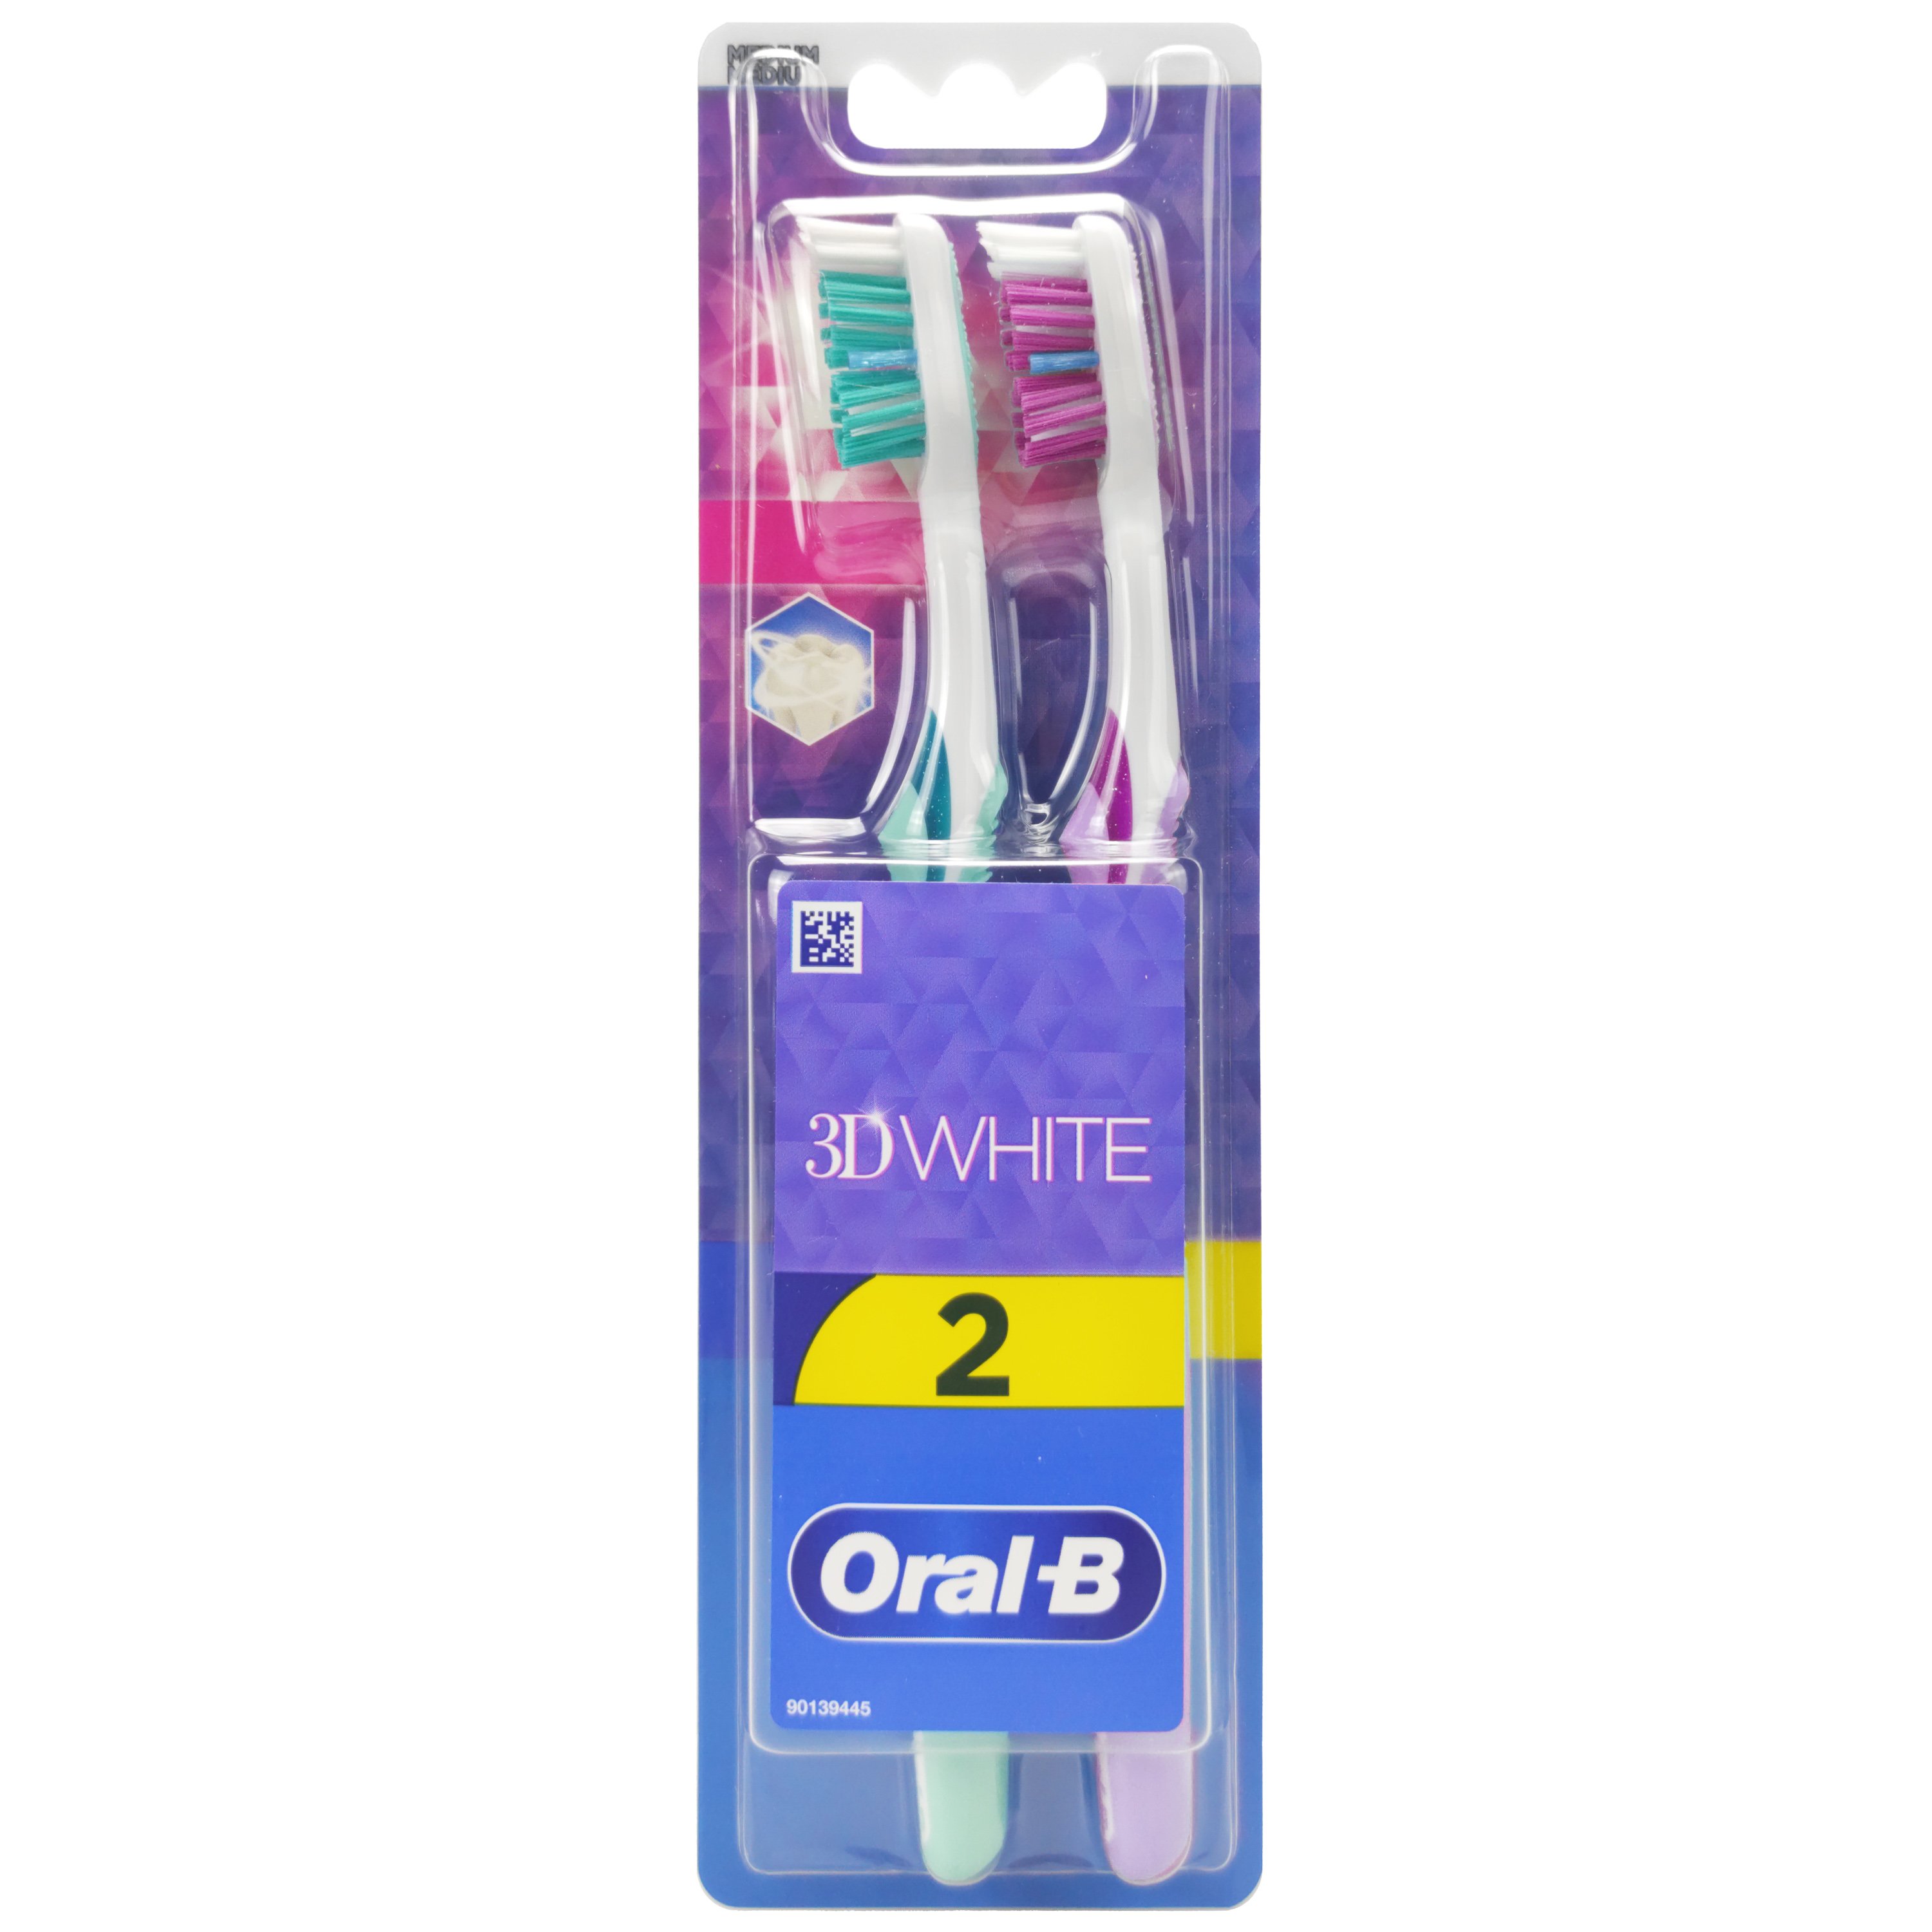 Oral-B 3D White Duo Medium Toothbrush Μέτρια Χειροκίνητη Οδοντόβουρτσα για Ενήλικες 2 Τεμάχια – Τιρκουάζ / Μωβ